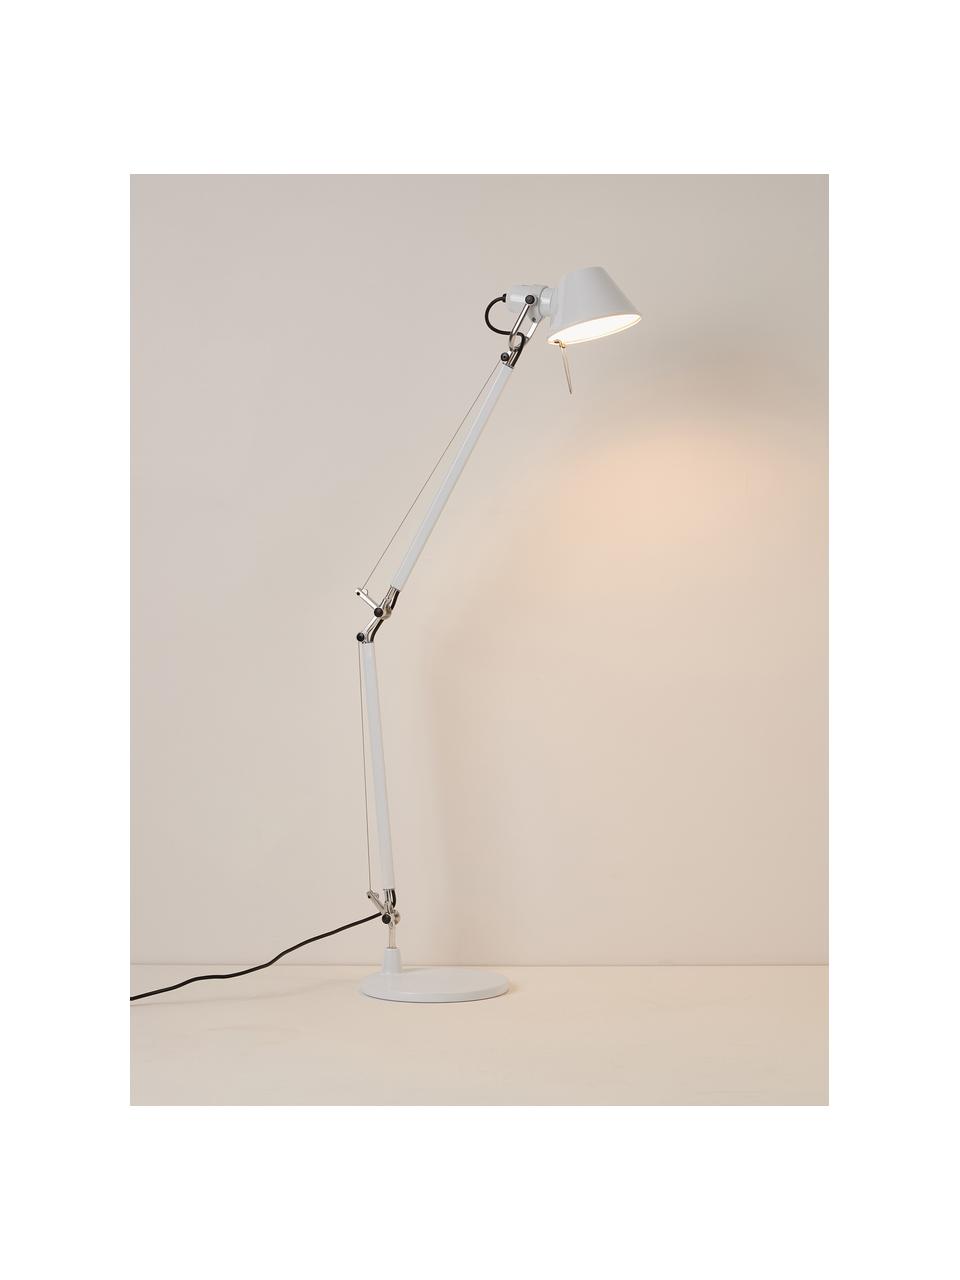 Lampe à poser Tolomeo, Blanc, larg. 78 x haut. 65 cm